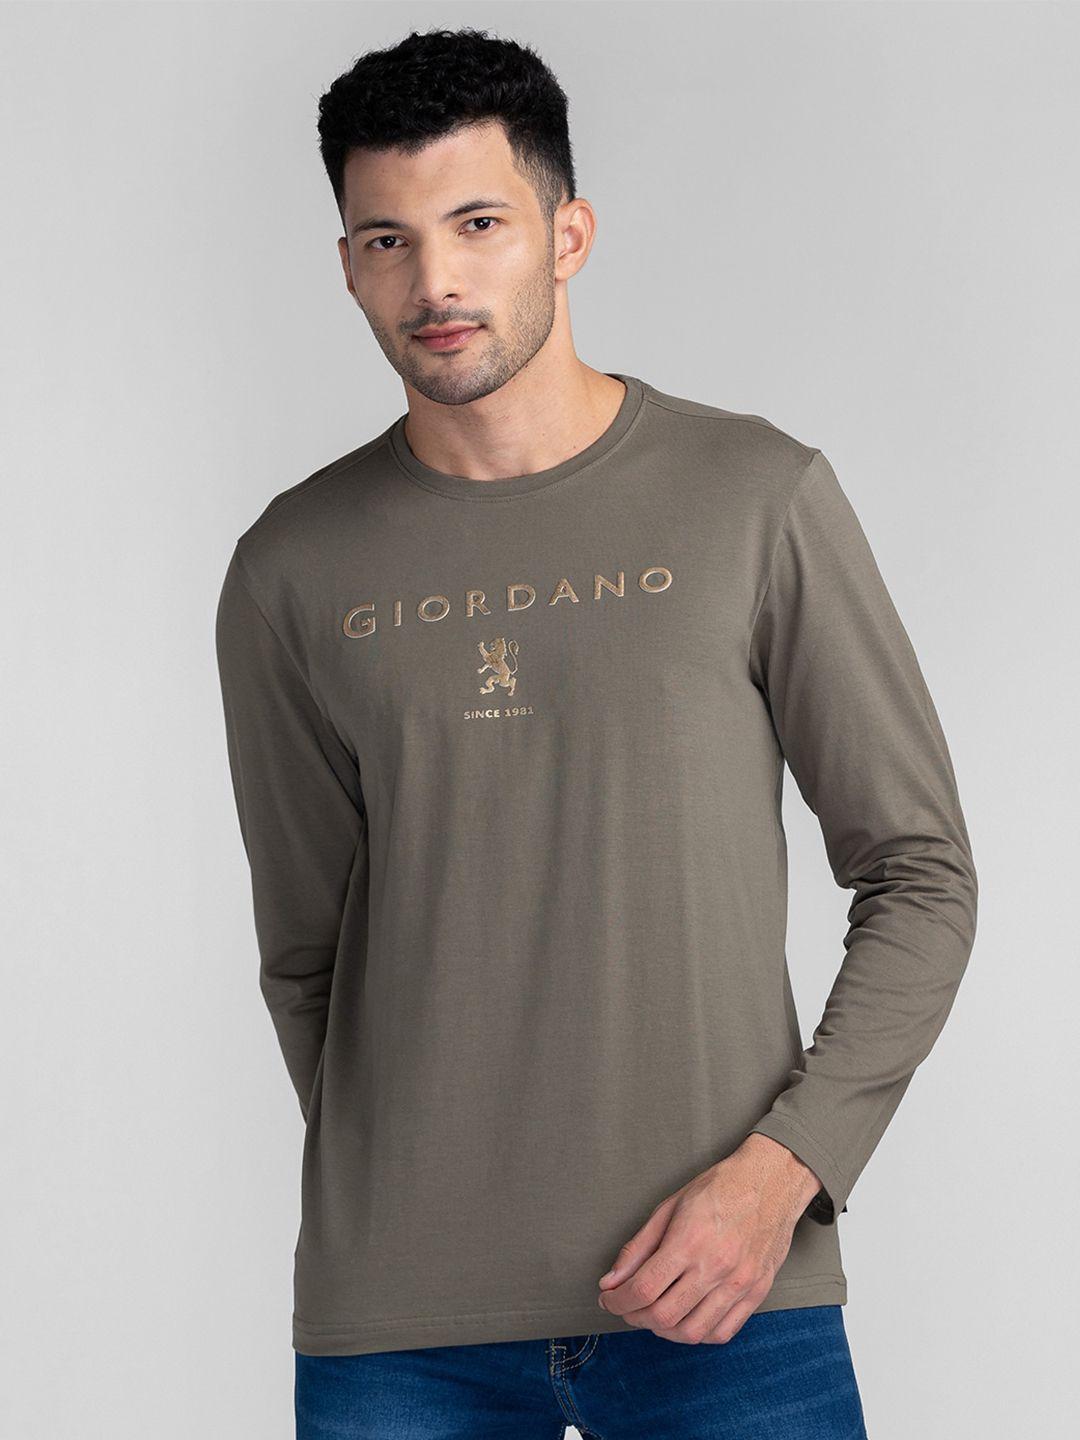 giordano brand logo printed bio finish slim fit cotton t-shirt